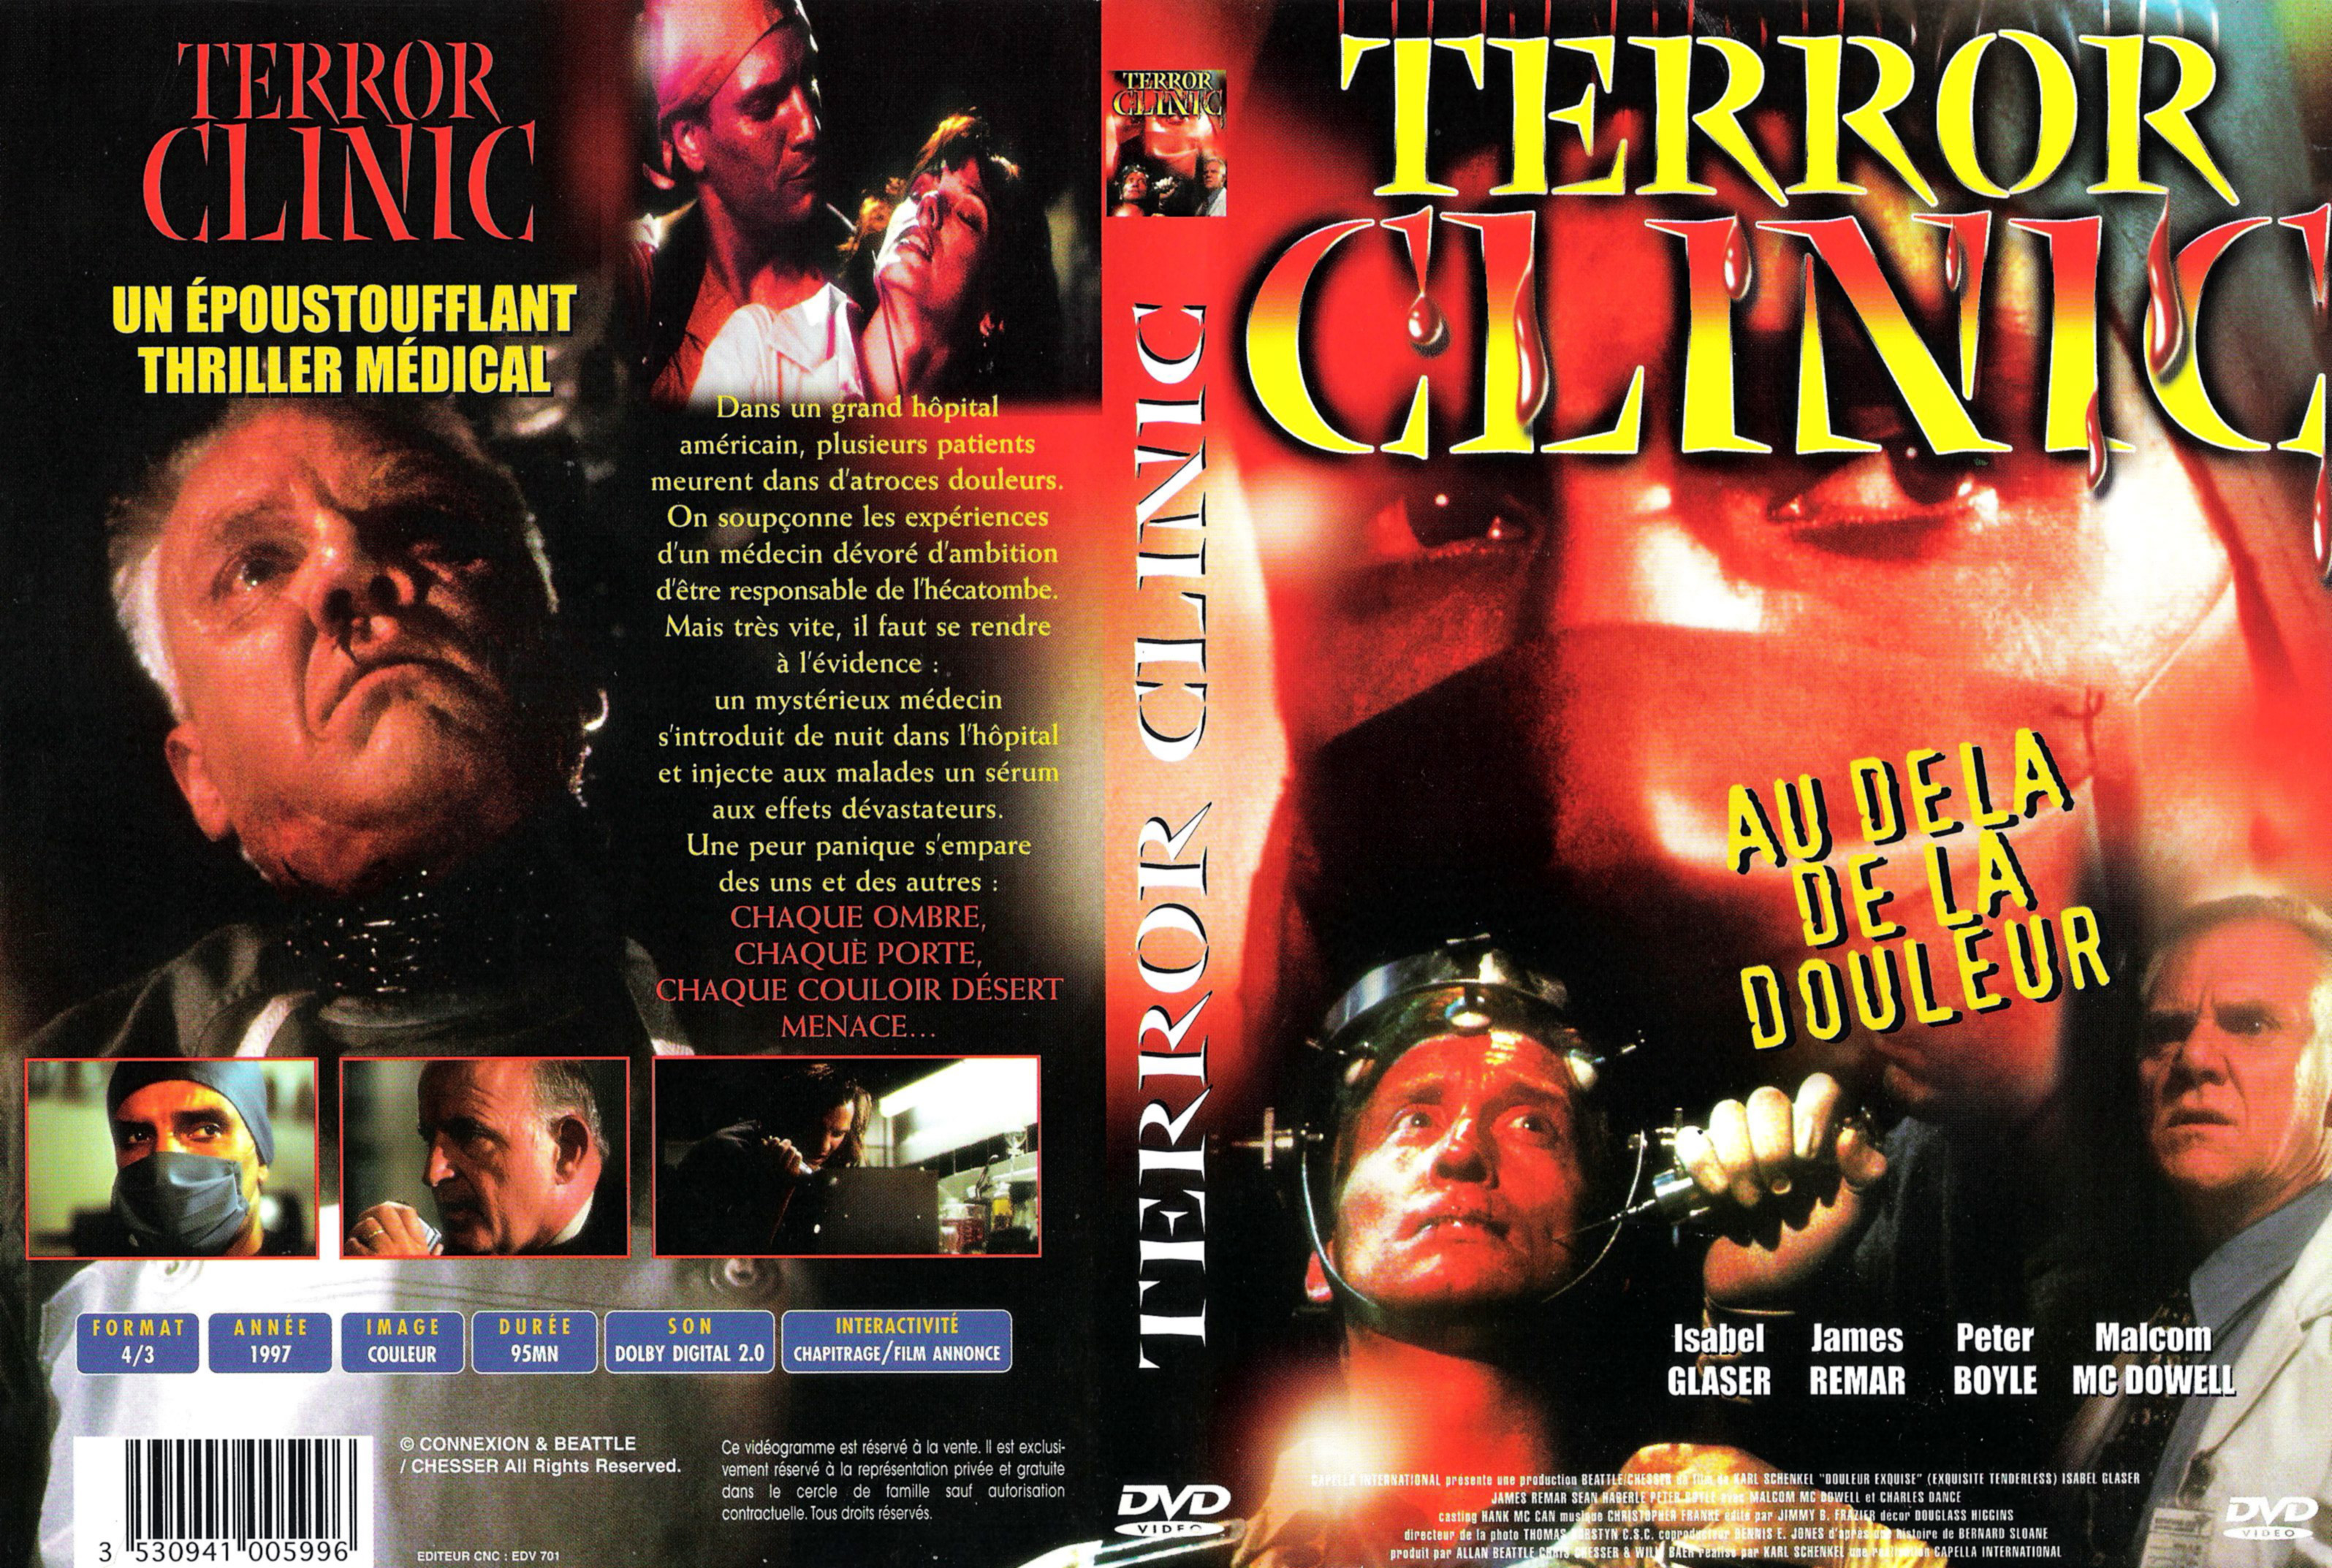 Jaquette DVD Terror clinic v2